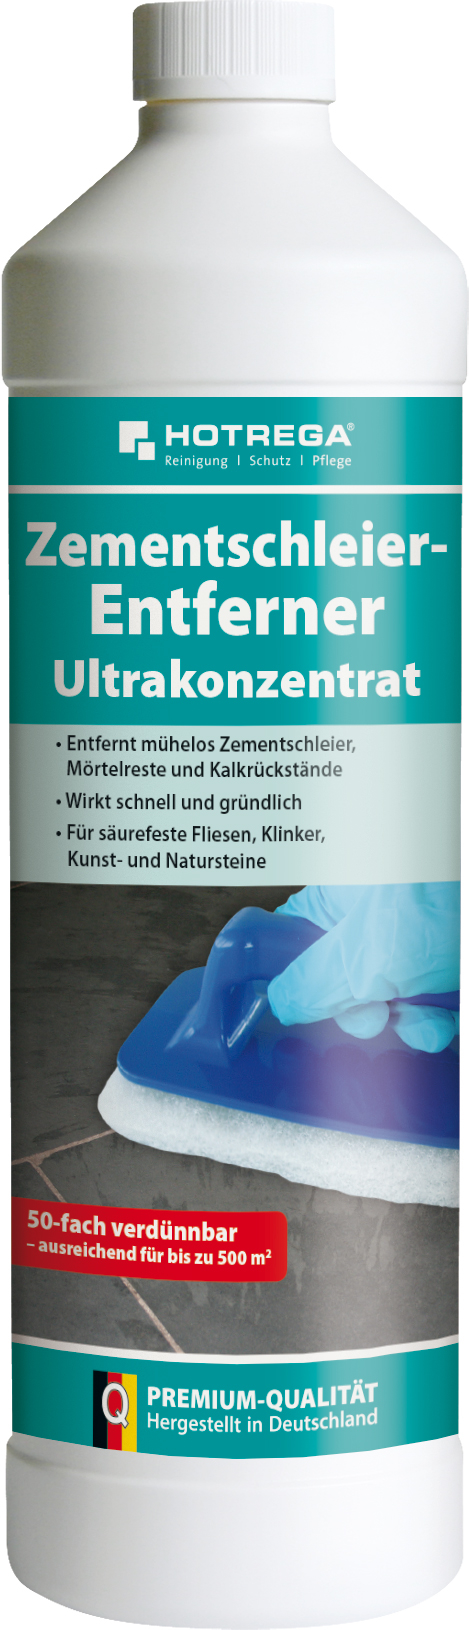 HOTREGA Zementschleier-Entf.-Ultrakonzentrat 1l 